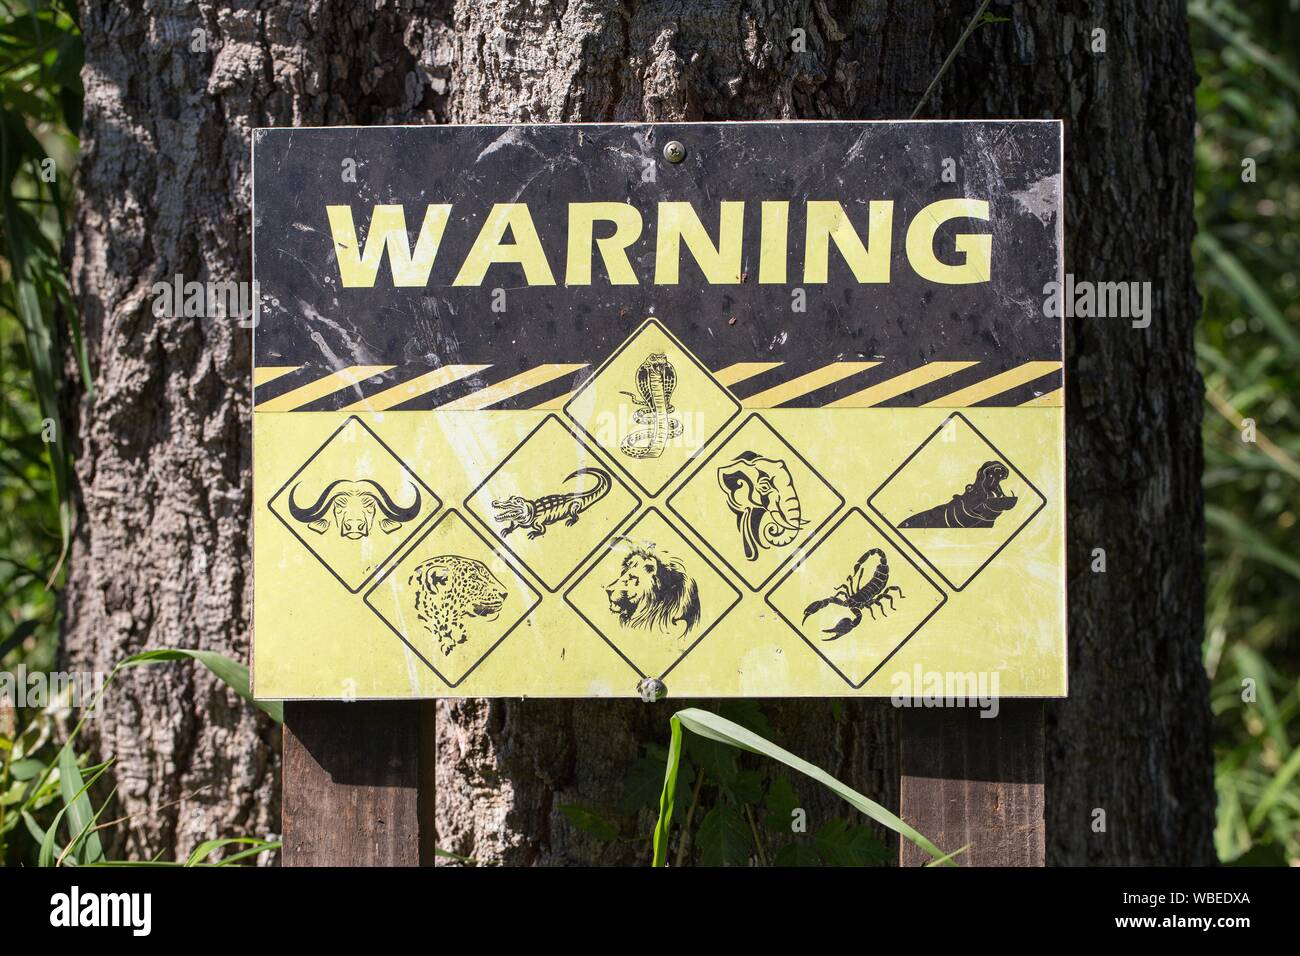 Warning sign, warning of various dangerous African animals, Honeyguide Camp, Manyeleti Game Reserve, South Africa Stock Photo